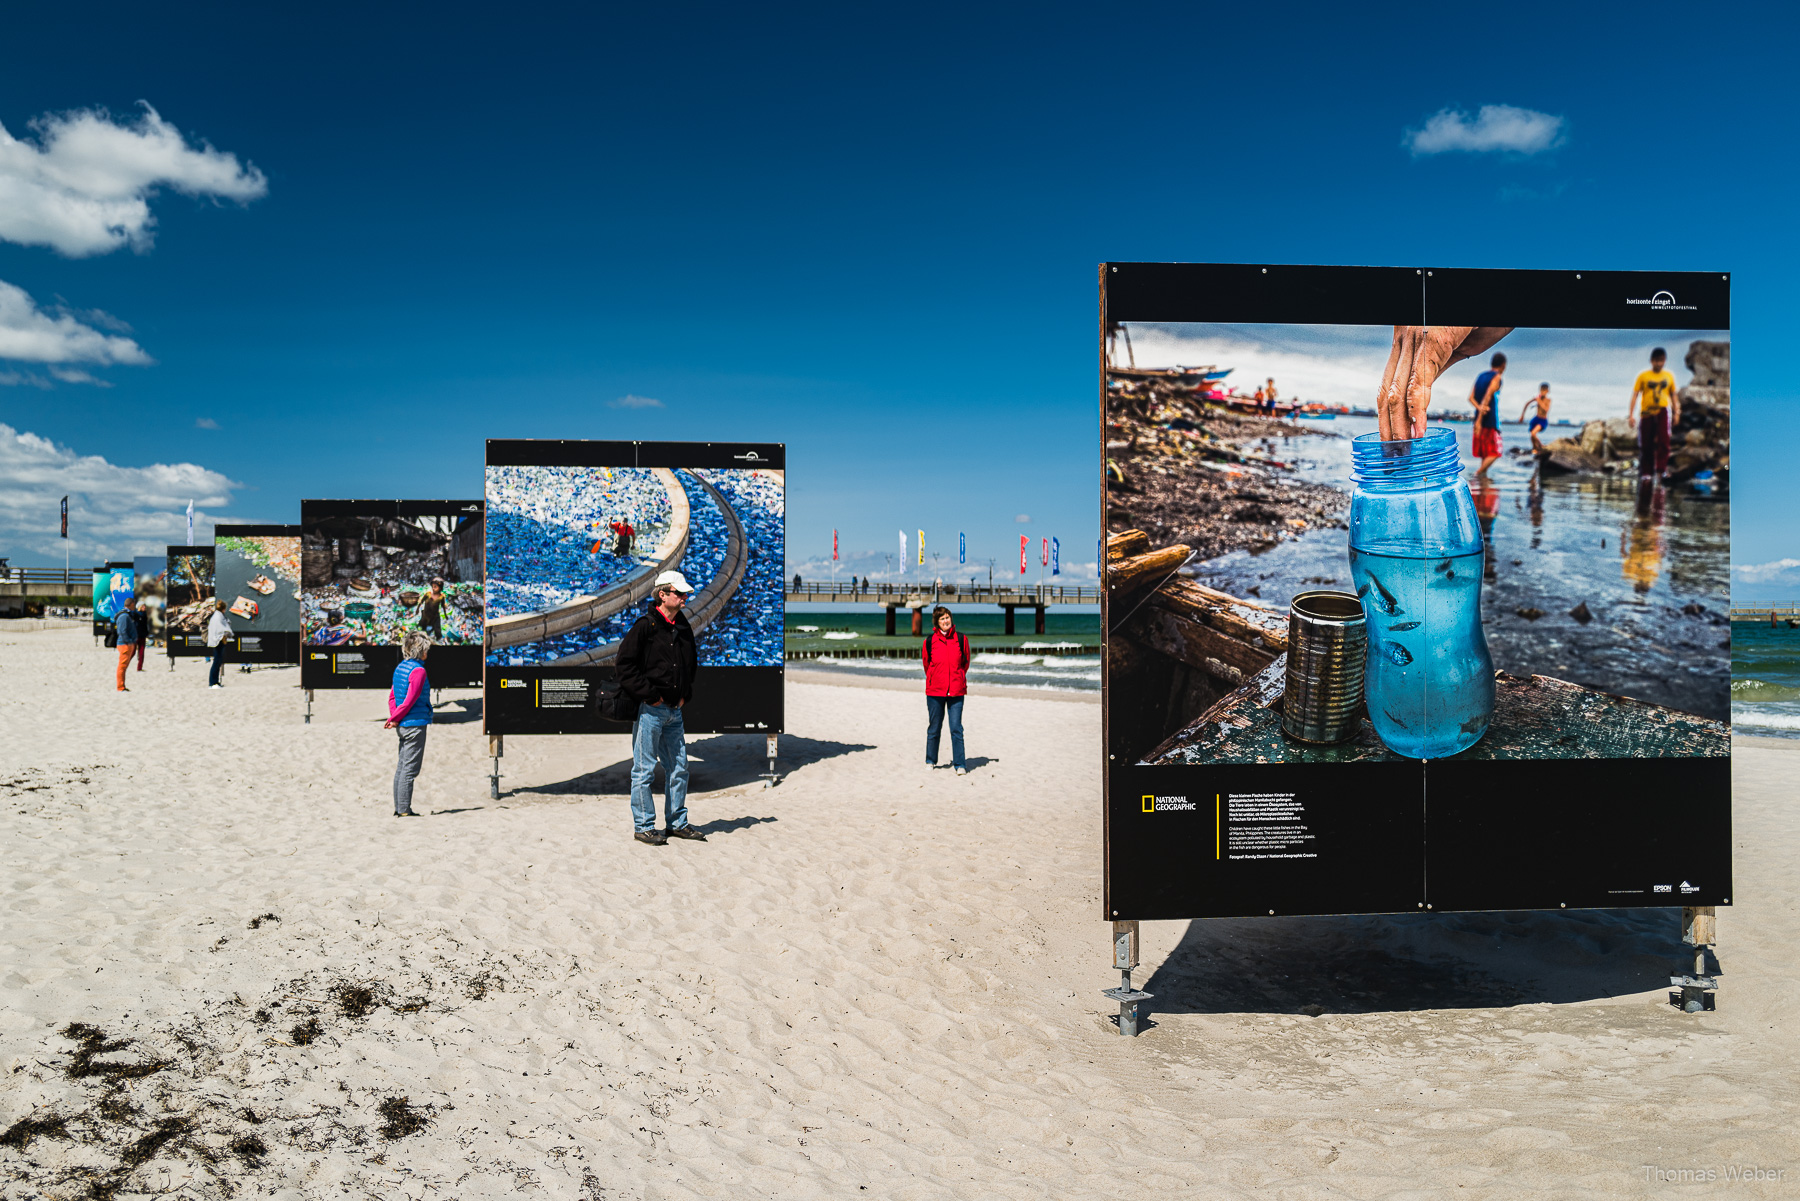 Umweltfotofestival 'horizonte zingst' 2019 an der Ostsee, Fotograf Thomas Weber aus Oldenburg